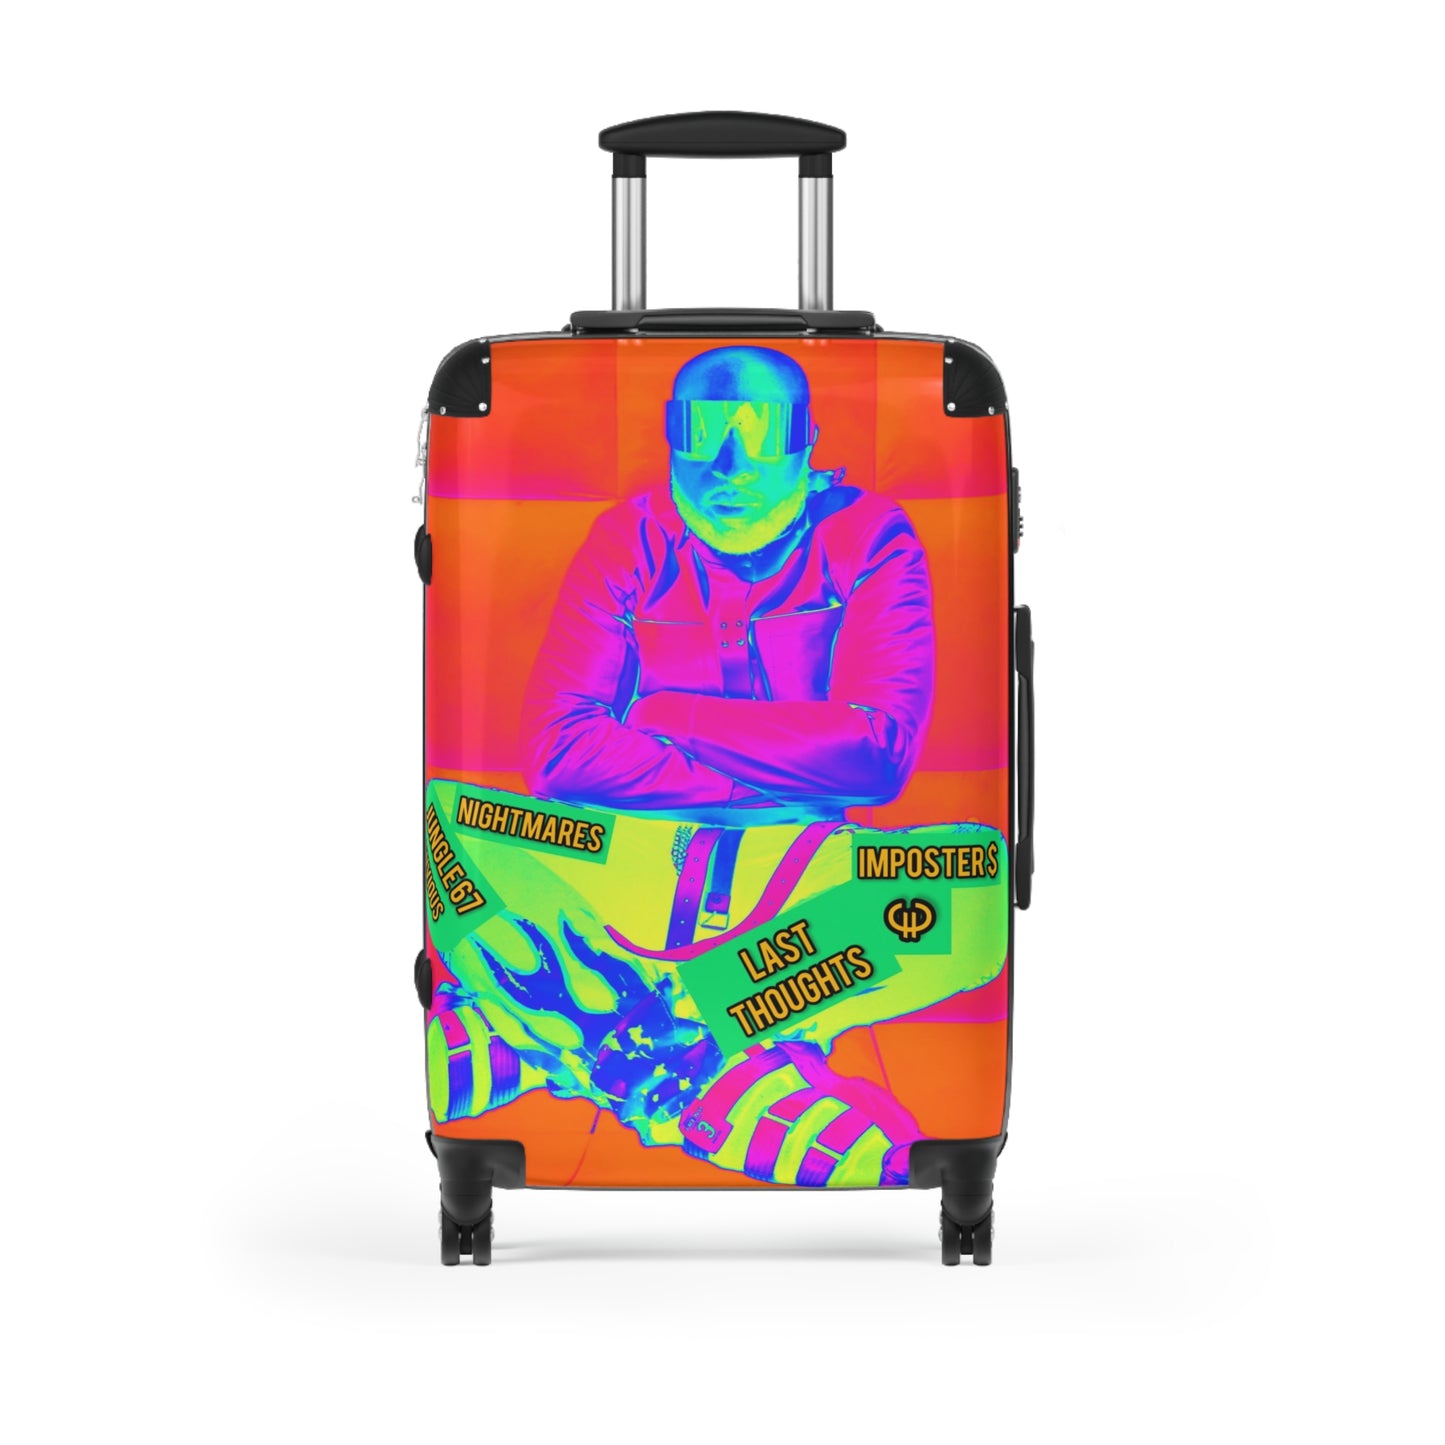 Going insane Suitcase